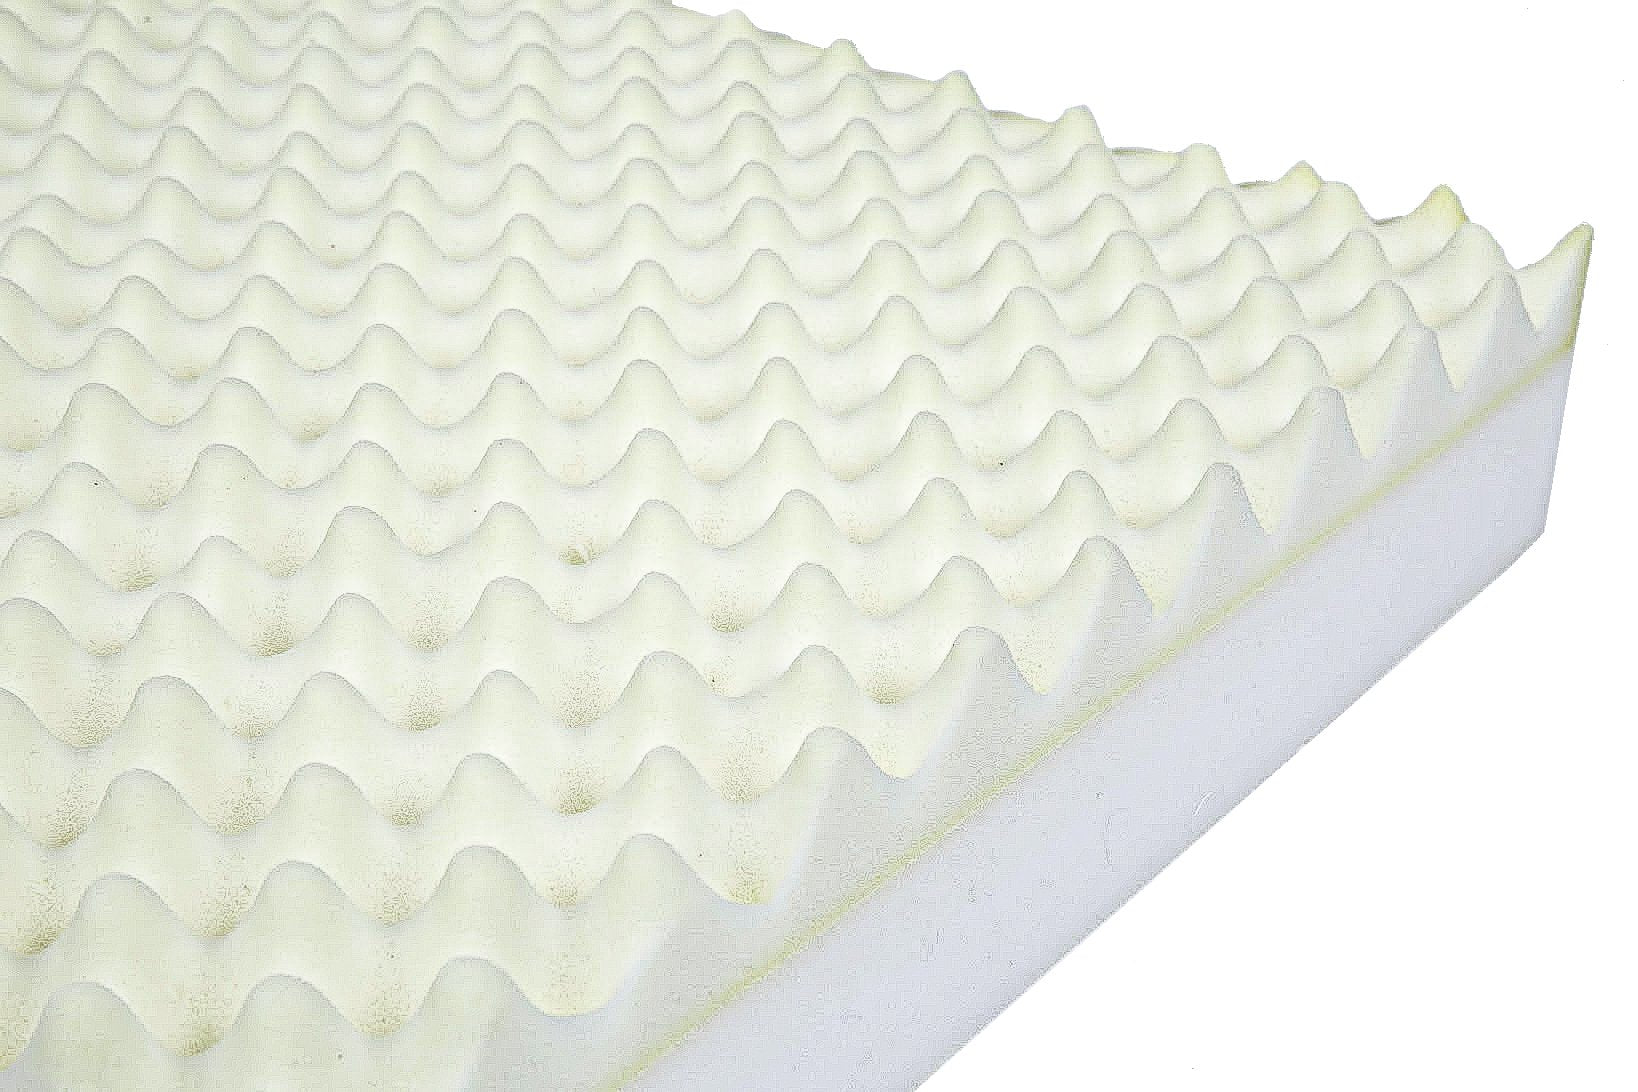 Buy wholesale Memory Foam mattress - Height 21 cm - Orthopedic and